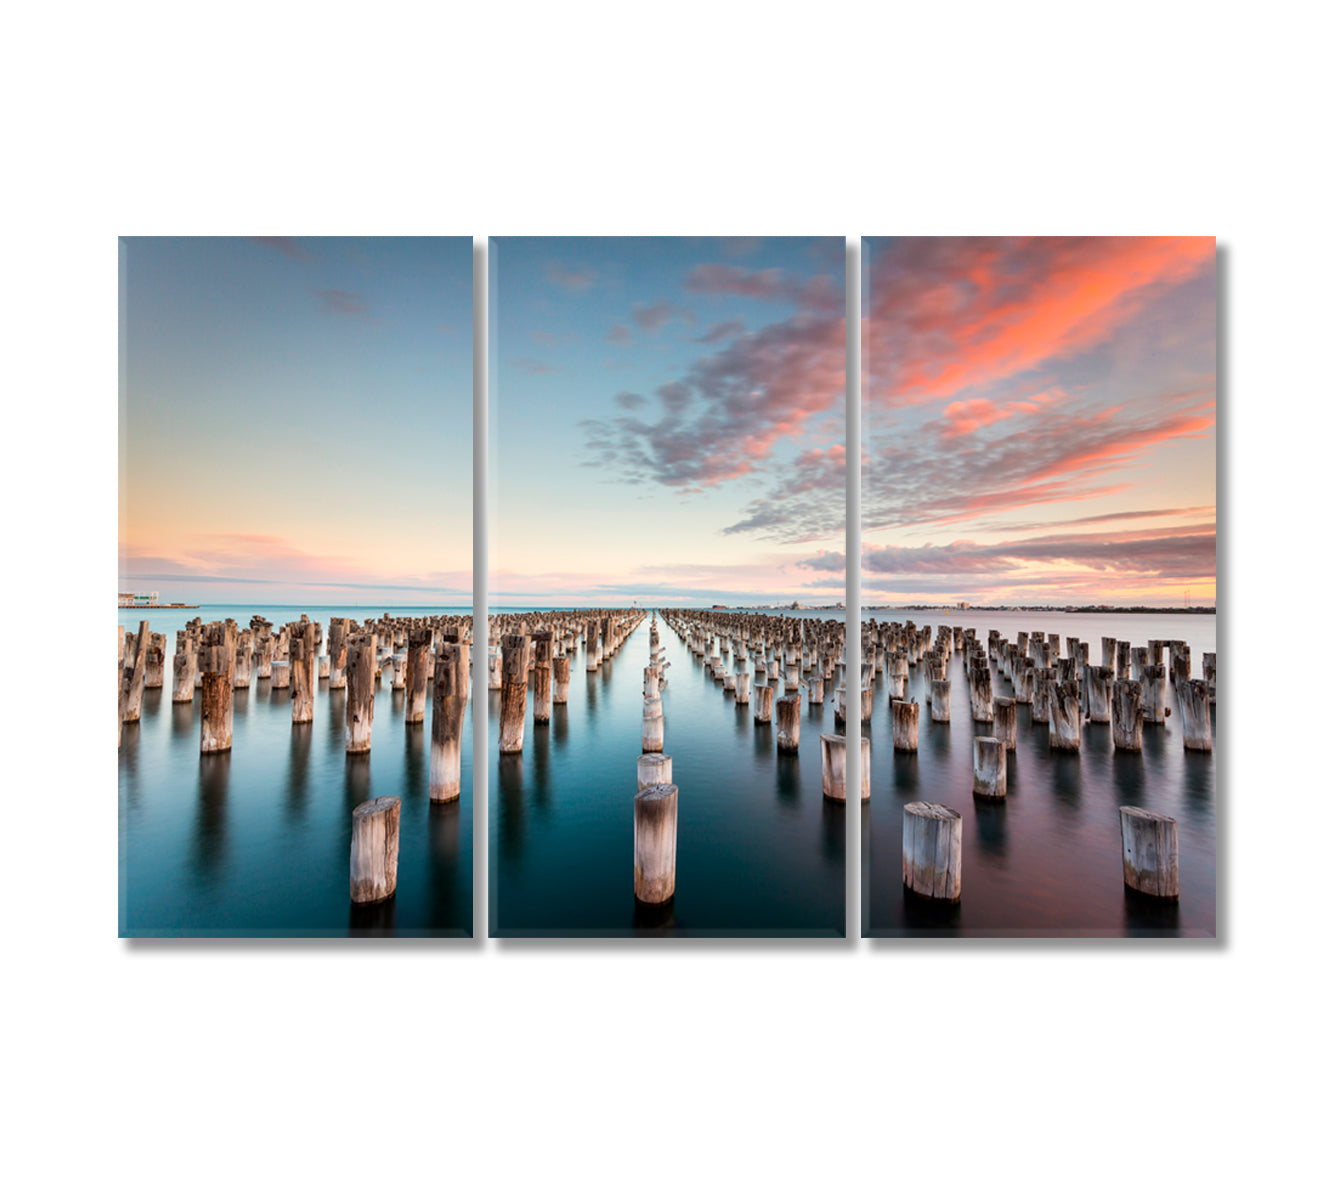 Princes Pier at Sunset in Port Melbourne Australia Canvas Print-Canvas Print-CetArt-3 Panels-36x24 inches-CetArt